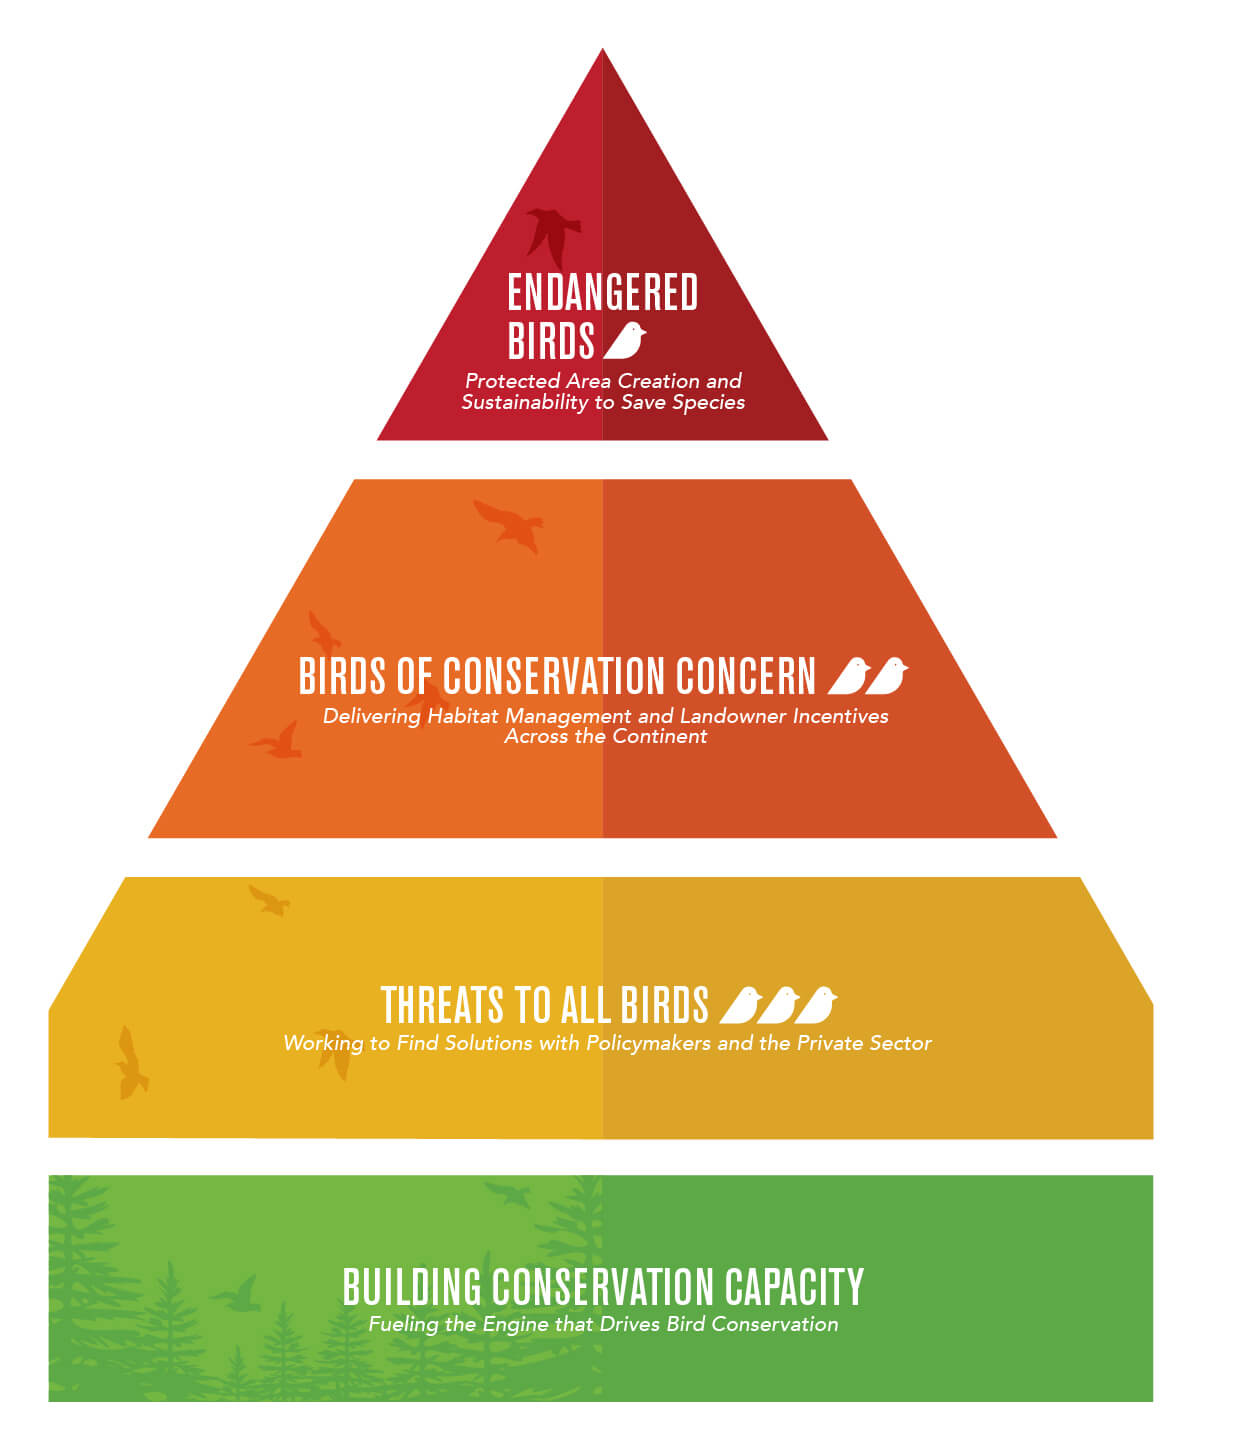 ABC's Strategic Bird Conservation Framework